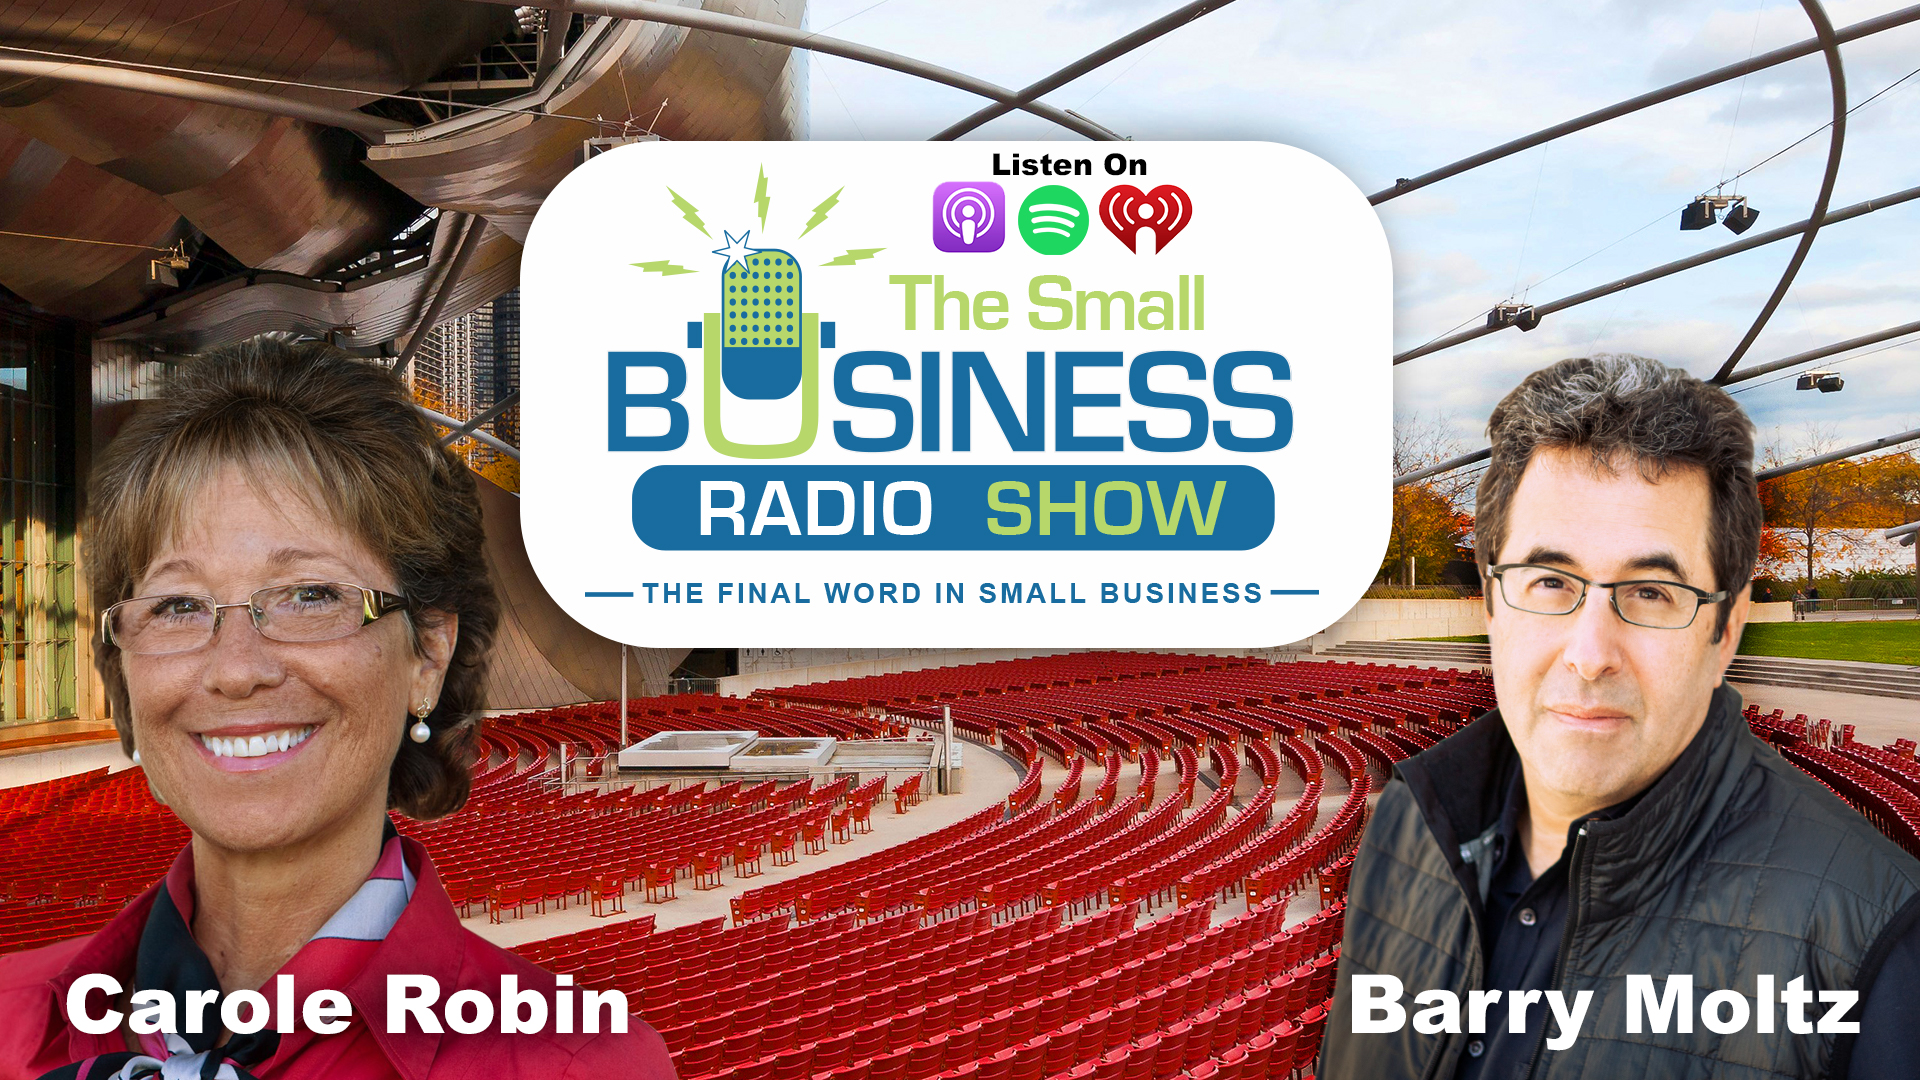 Carole Robin on The Small Business Radio Show